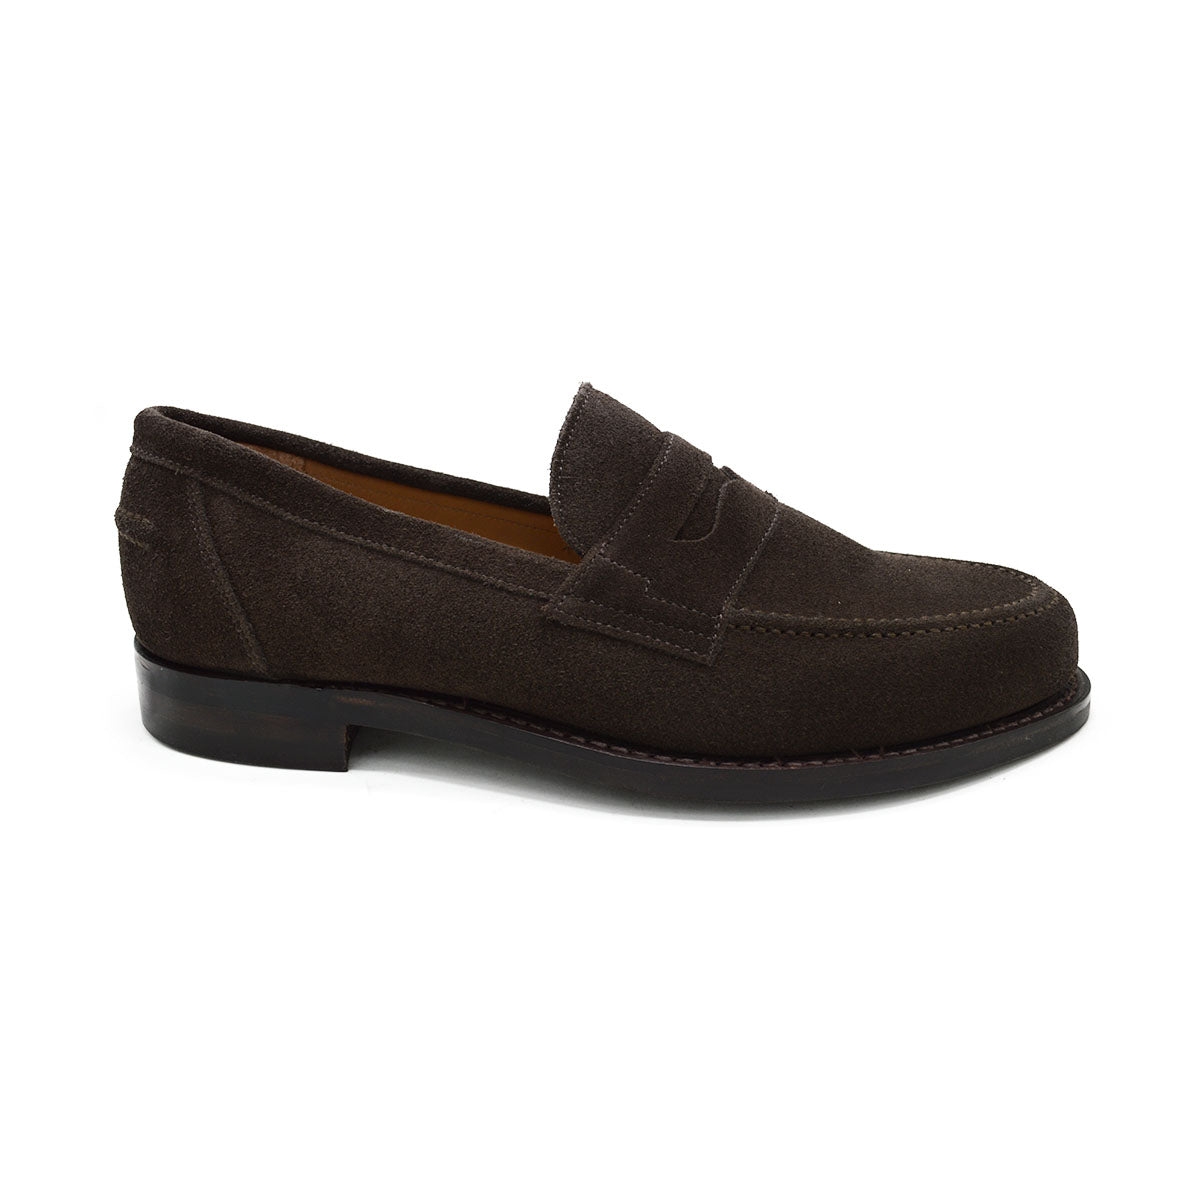 Paul Sargent Shoes – EXETER DARK BROWN, 11.5 UK (45.5 EU) / Dark Brown / Suede